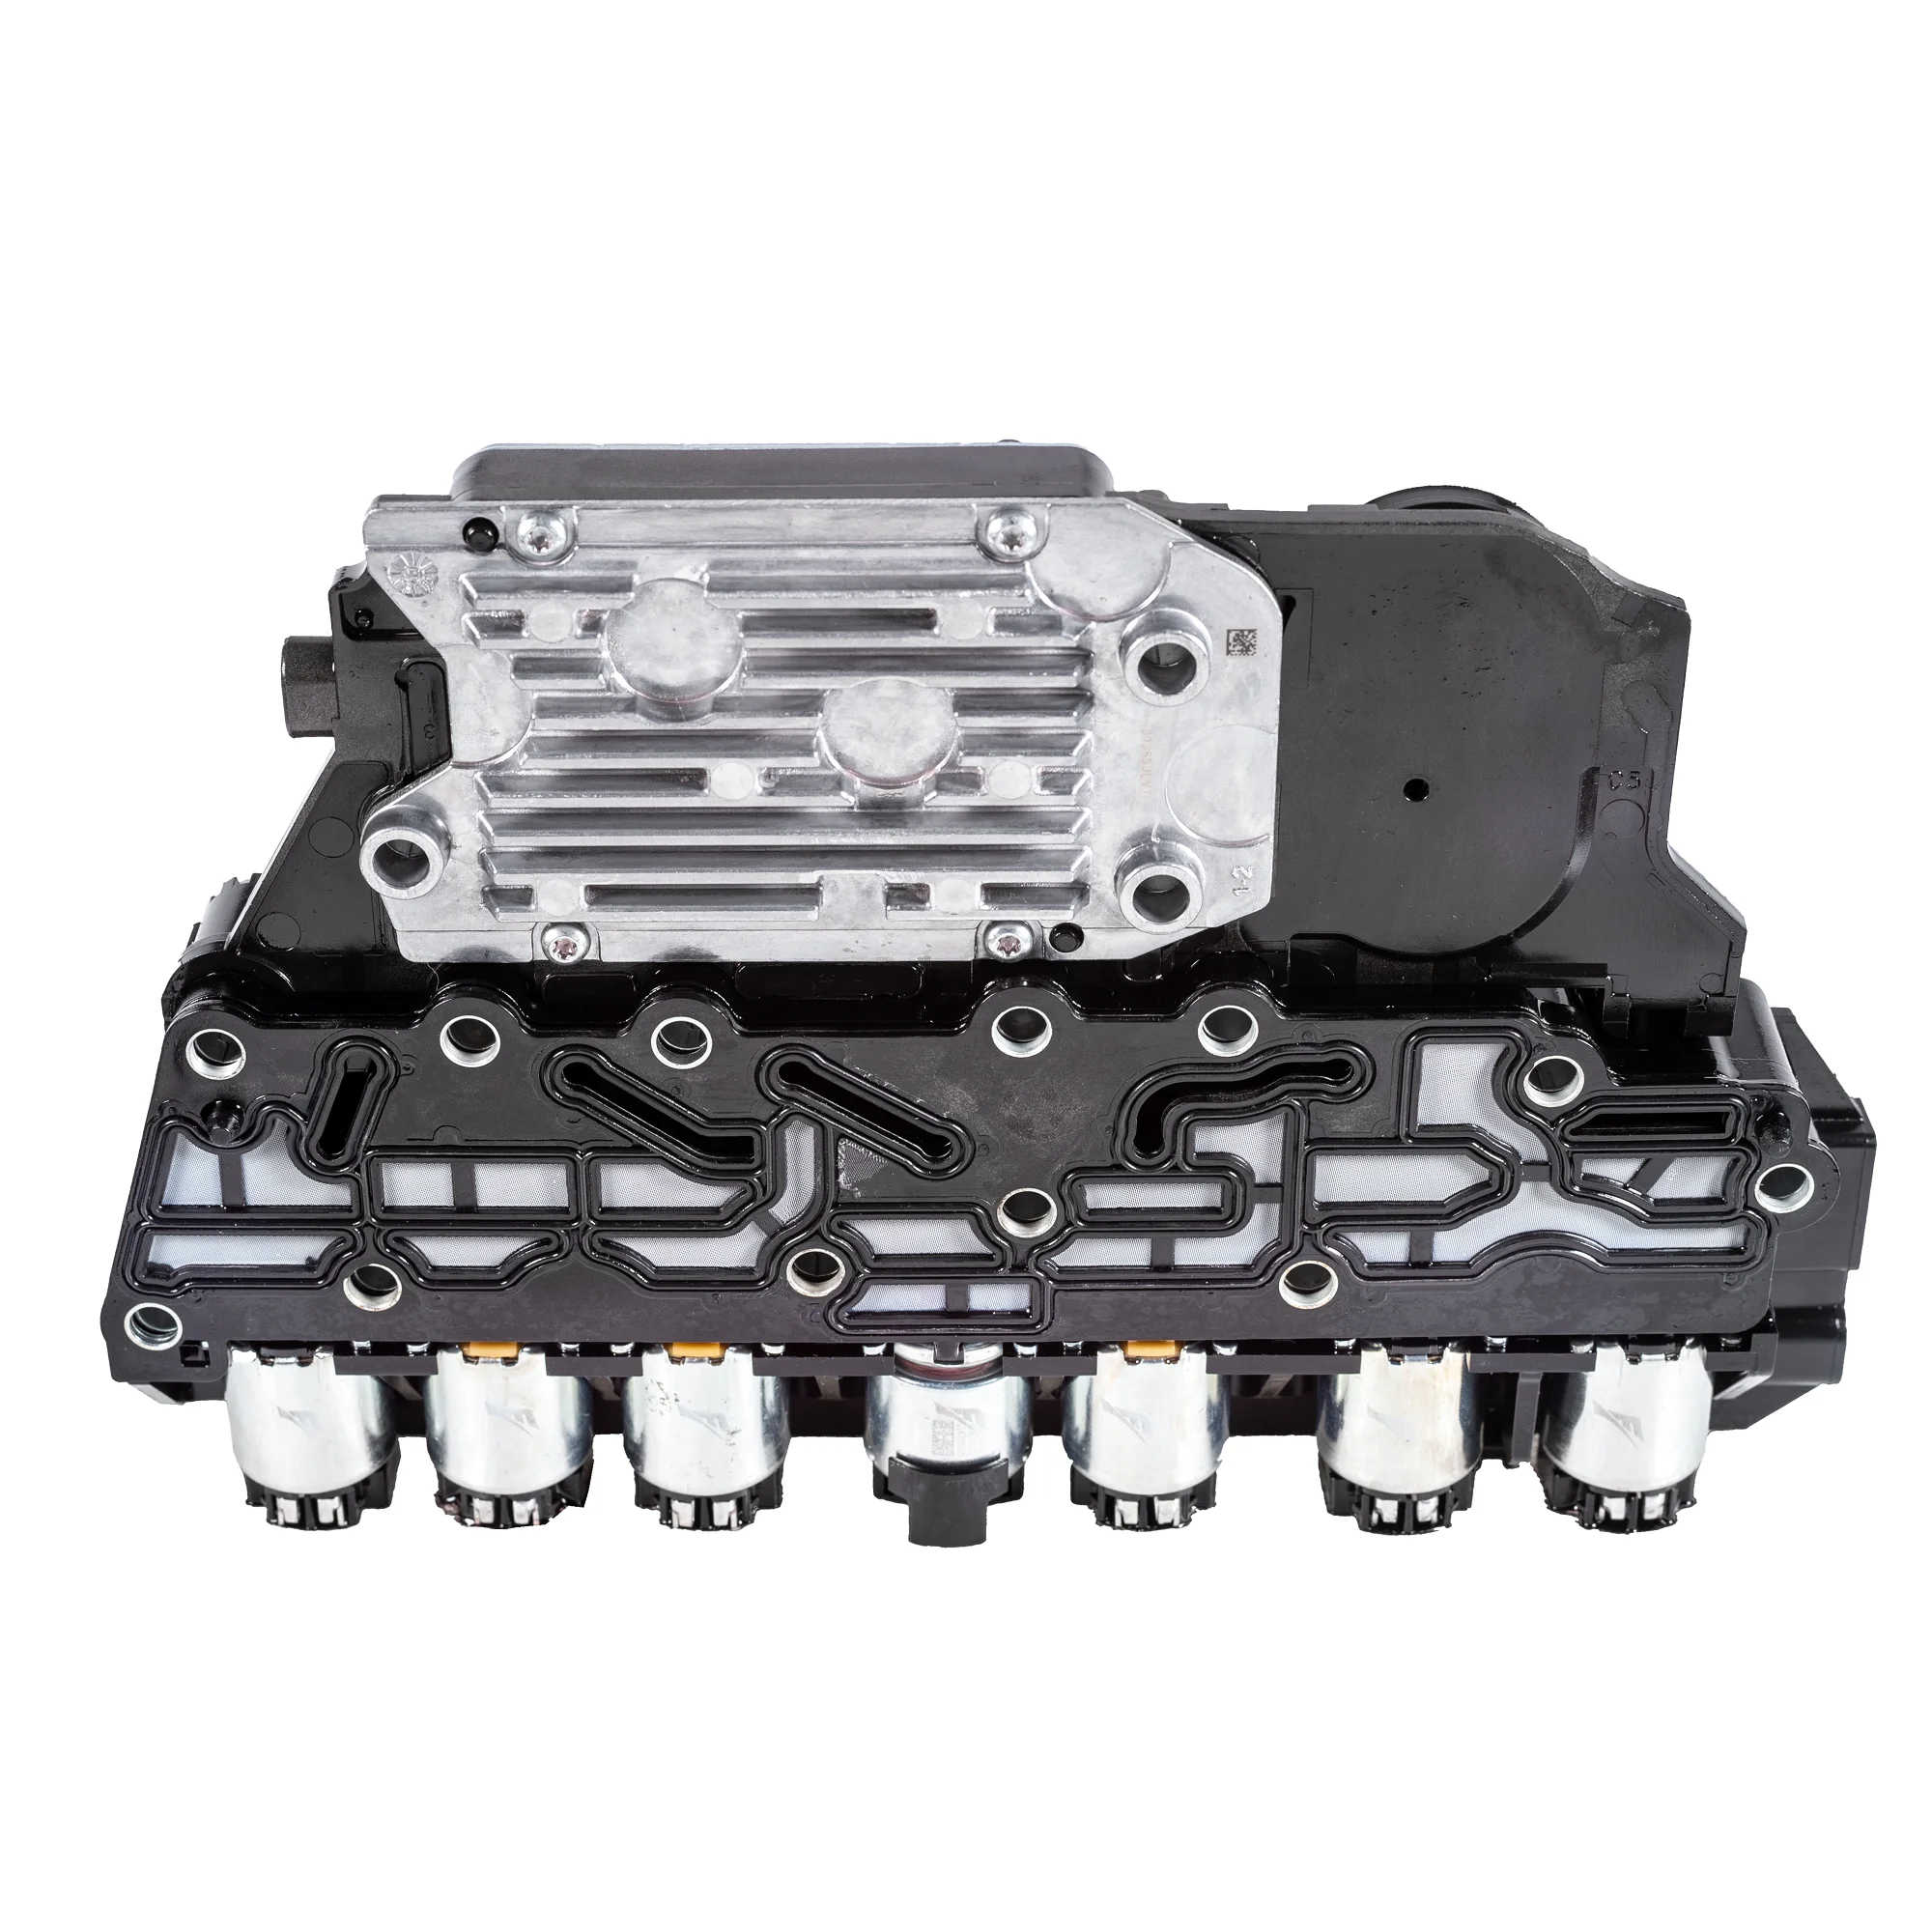 

6T30 6T40 6T50 Transmission Control Unit TCM 24256523 24256524 24256525 gearbox parts TCU for Chevrolet Cruz Malibu Epica GL8